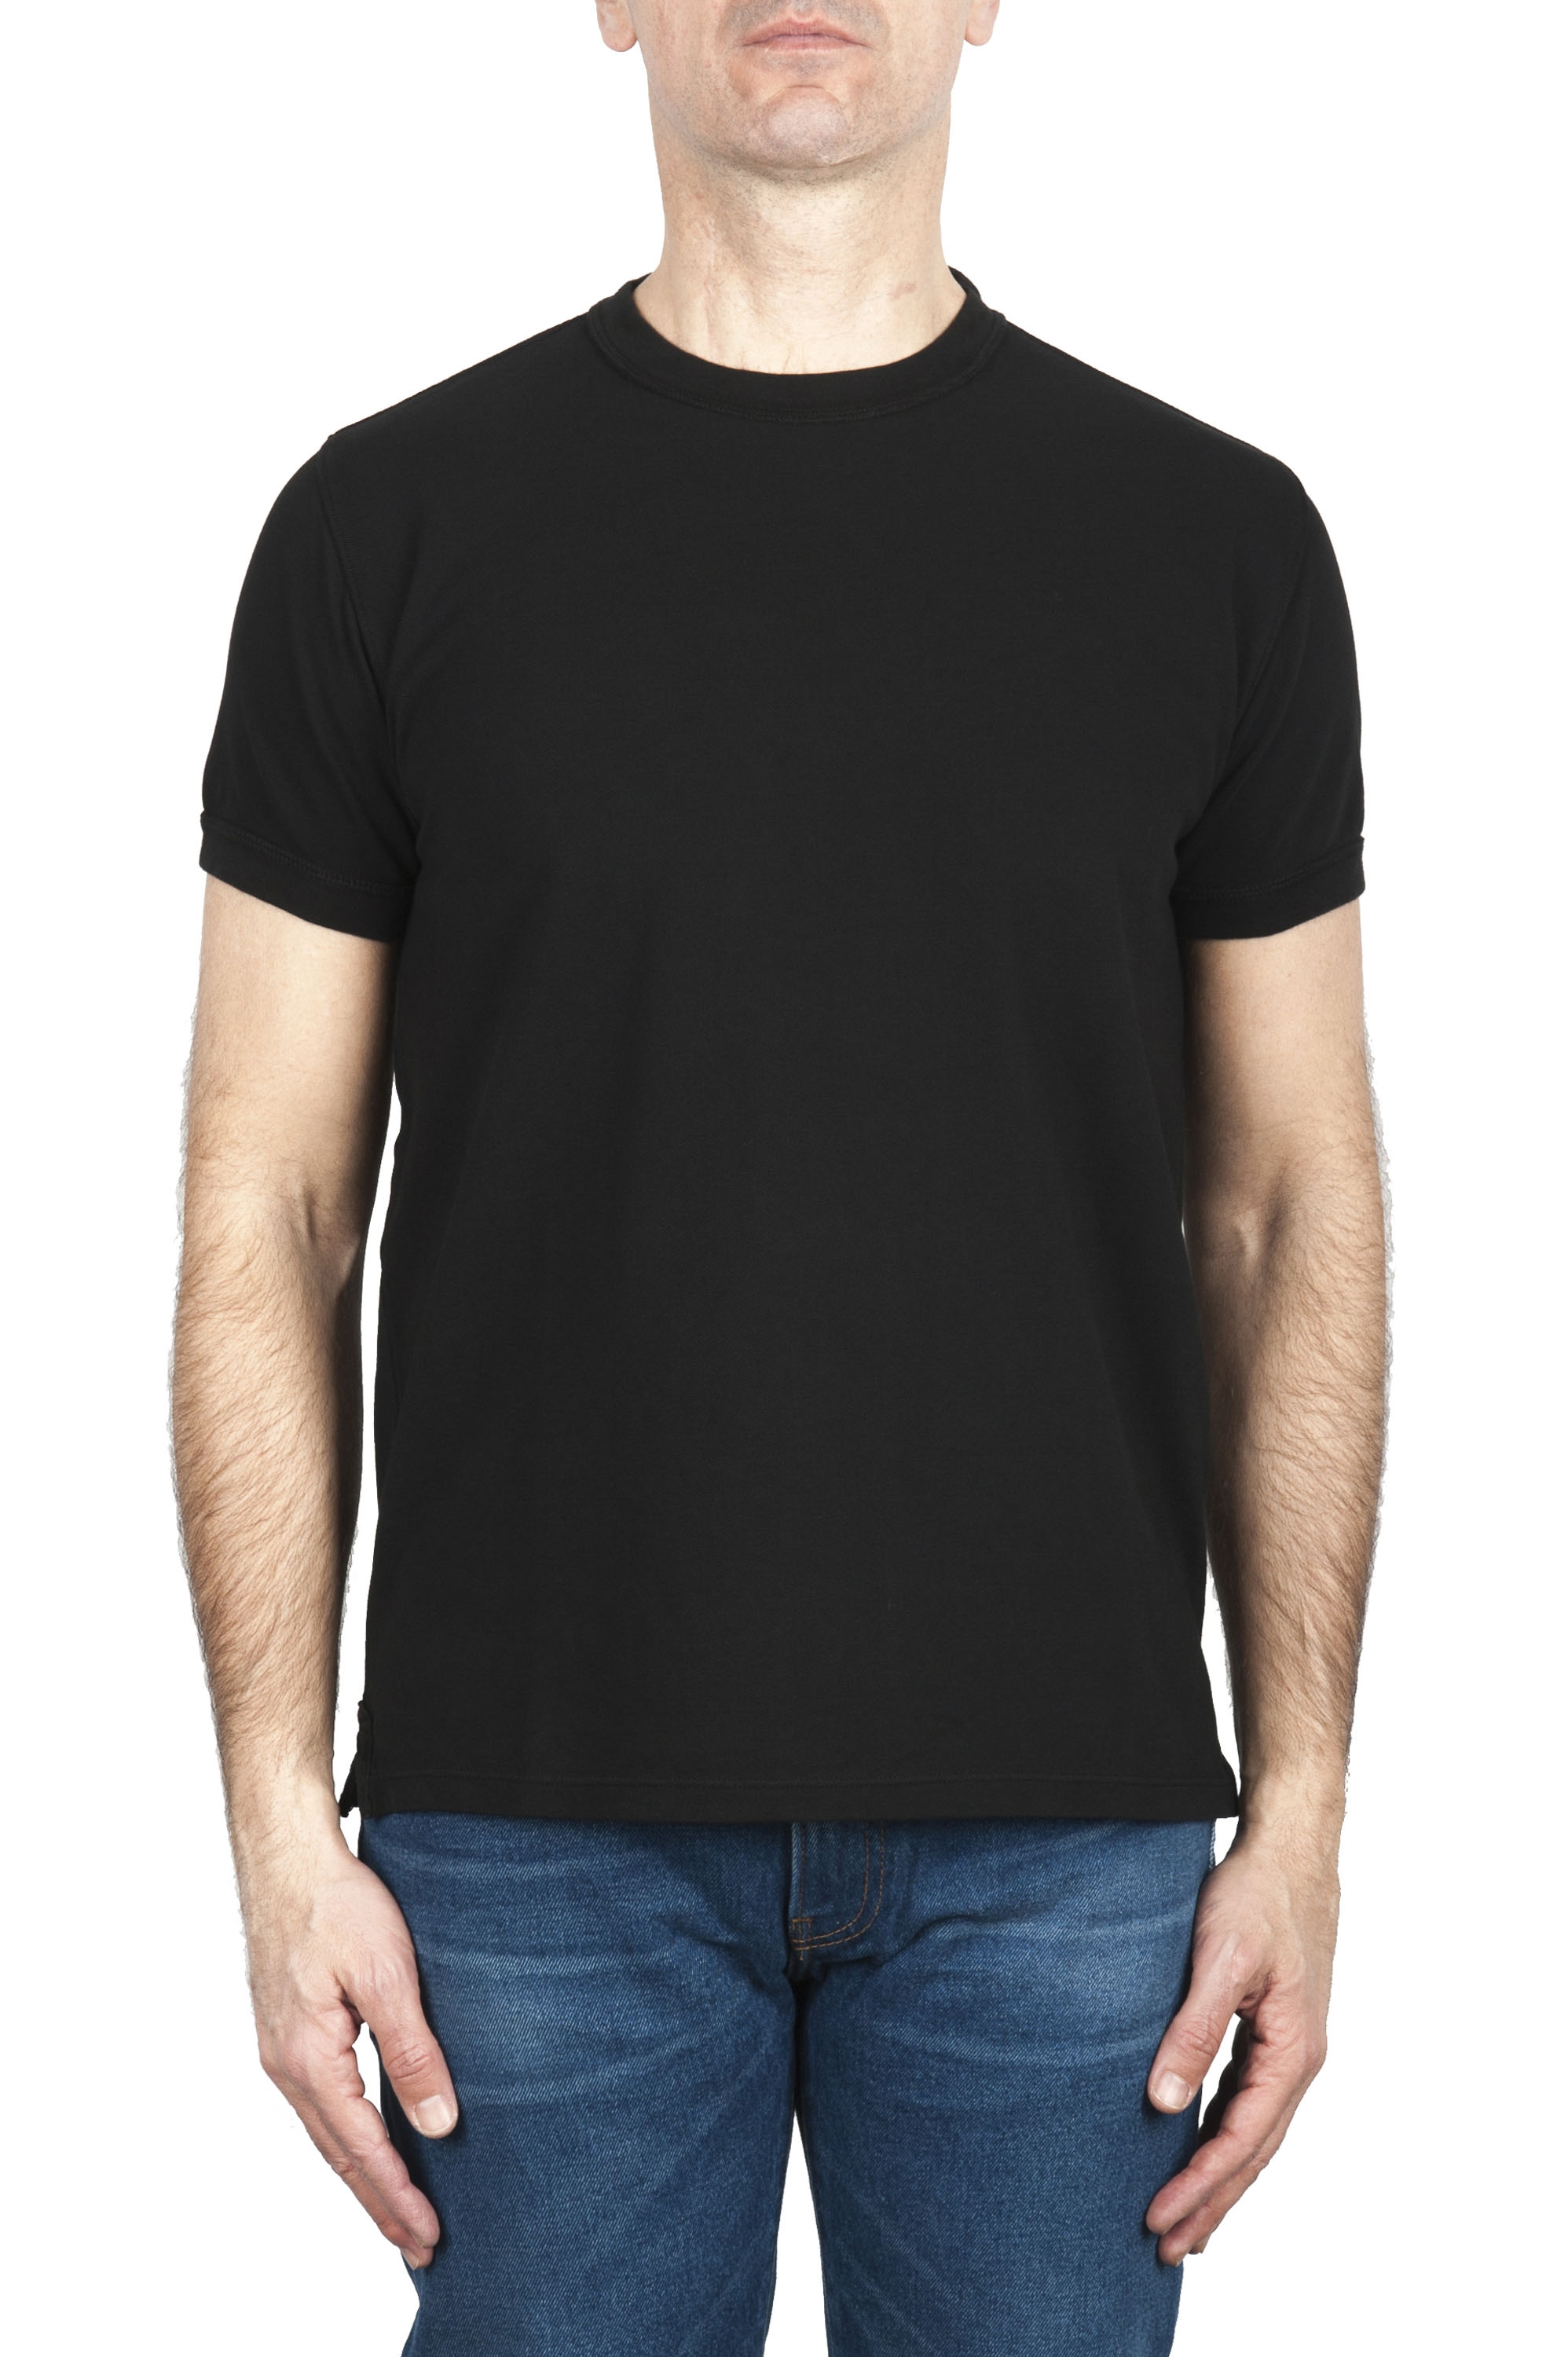 SBU 03077_2020AW T-shirt girocollo in cotone piqué nera 01